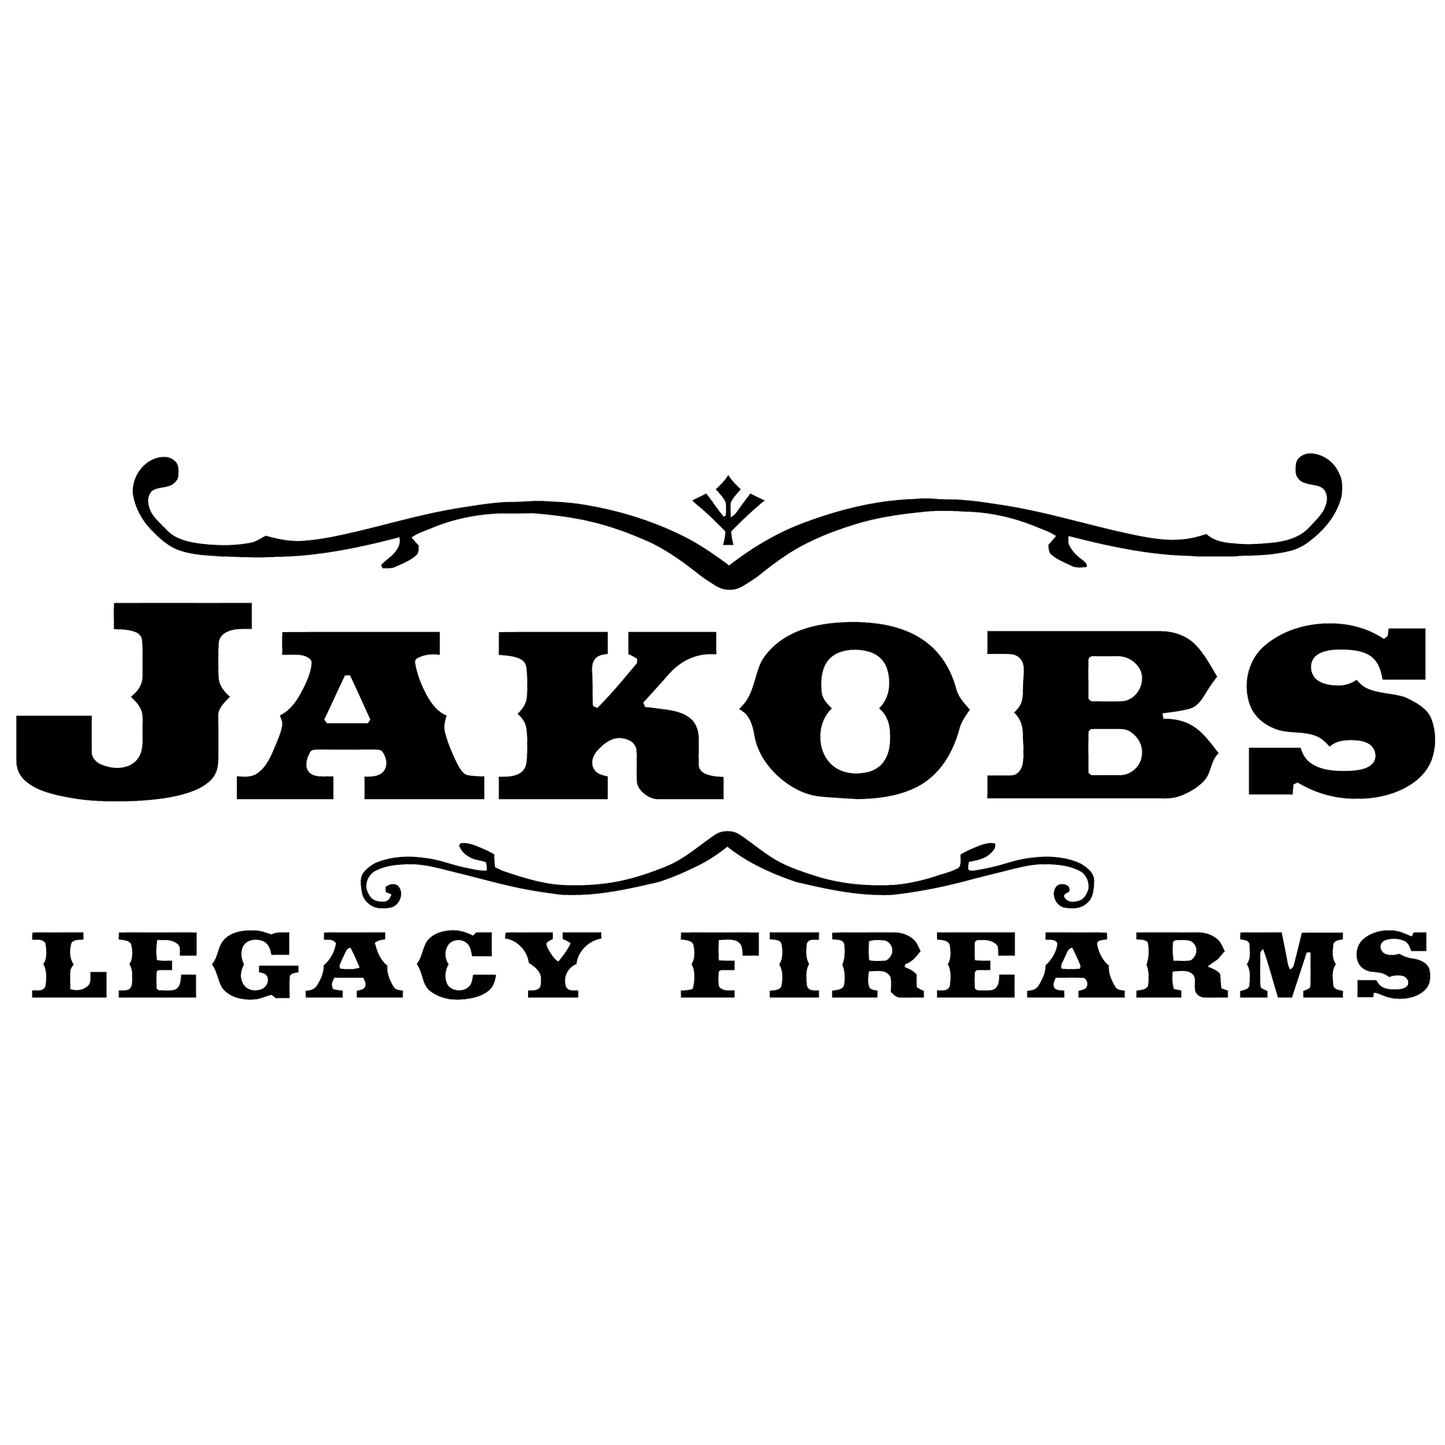 Borderlands Jakobs Legacy Firearms Vinyl Decal Sticker